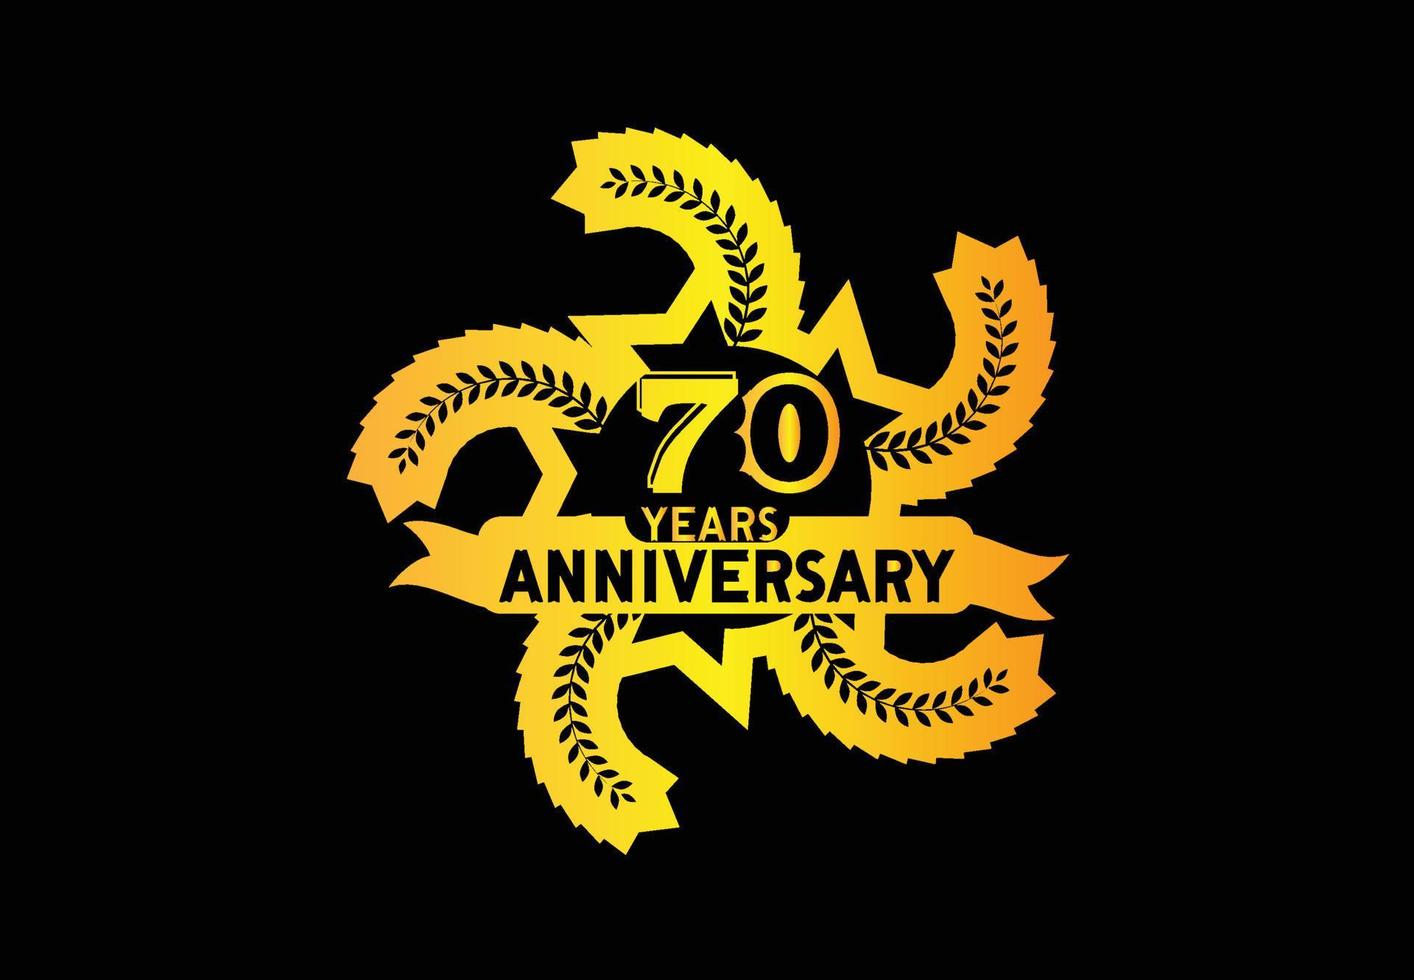 70 years anniversary logo and sticker design vector